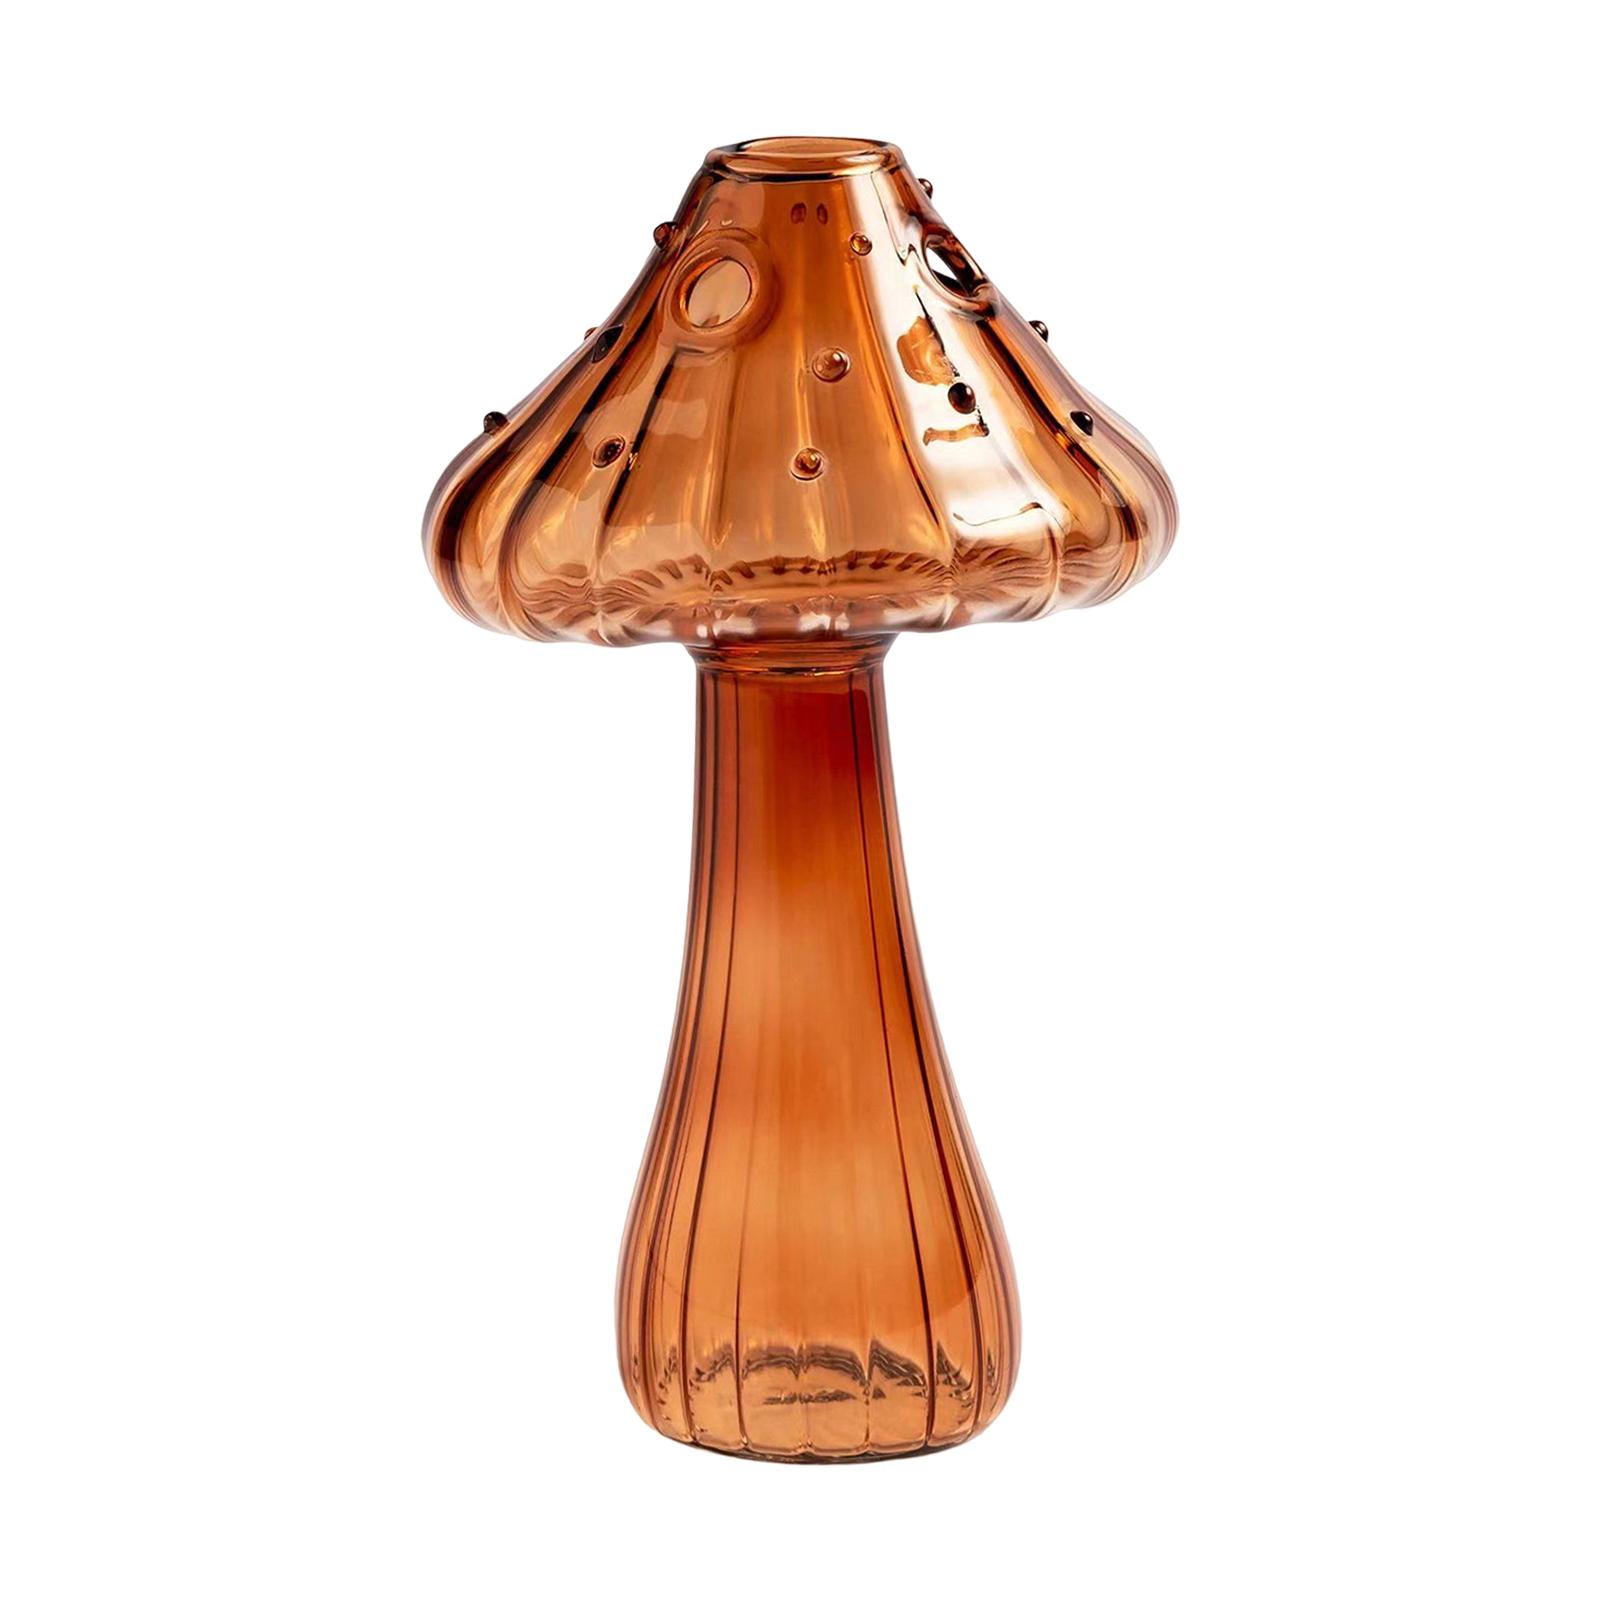 Creative Flower Vase Decorative Vases Mushroom Shaped Glass Vase Home Decor Brown